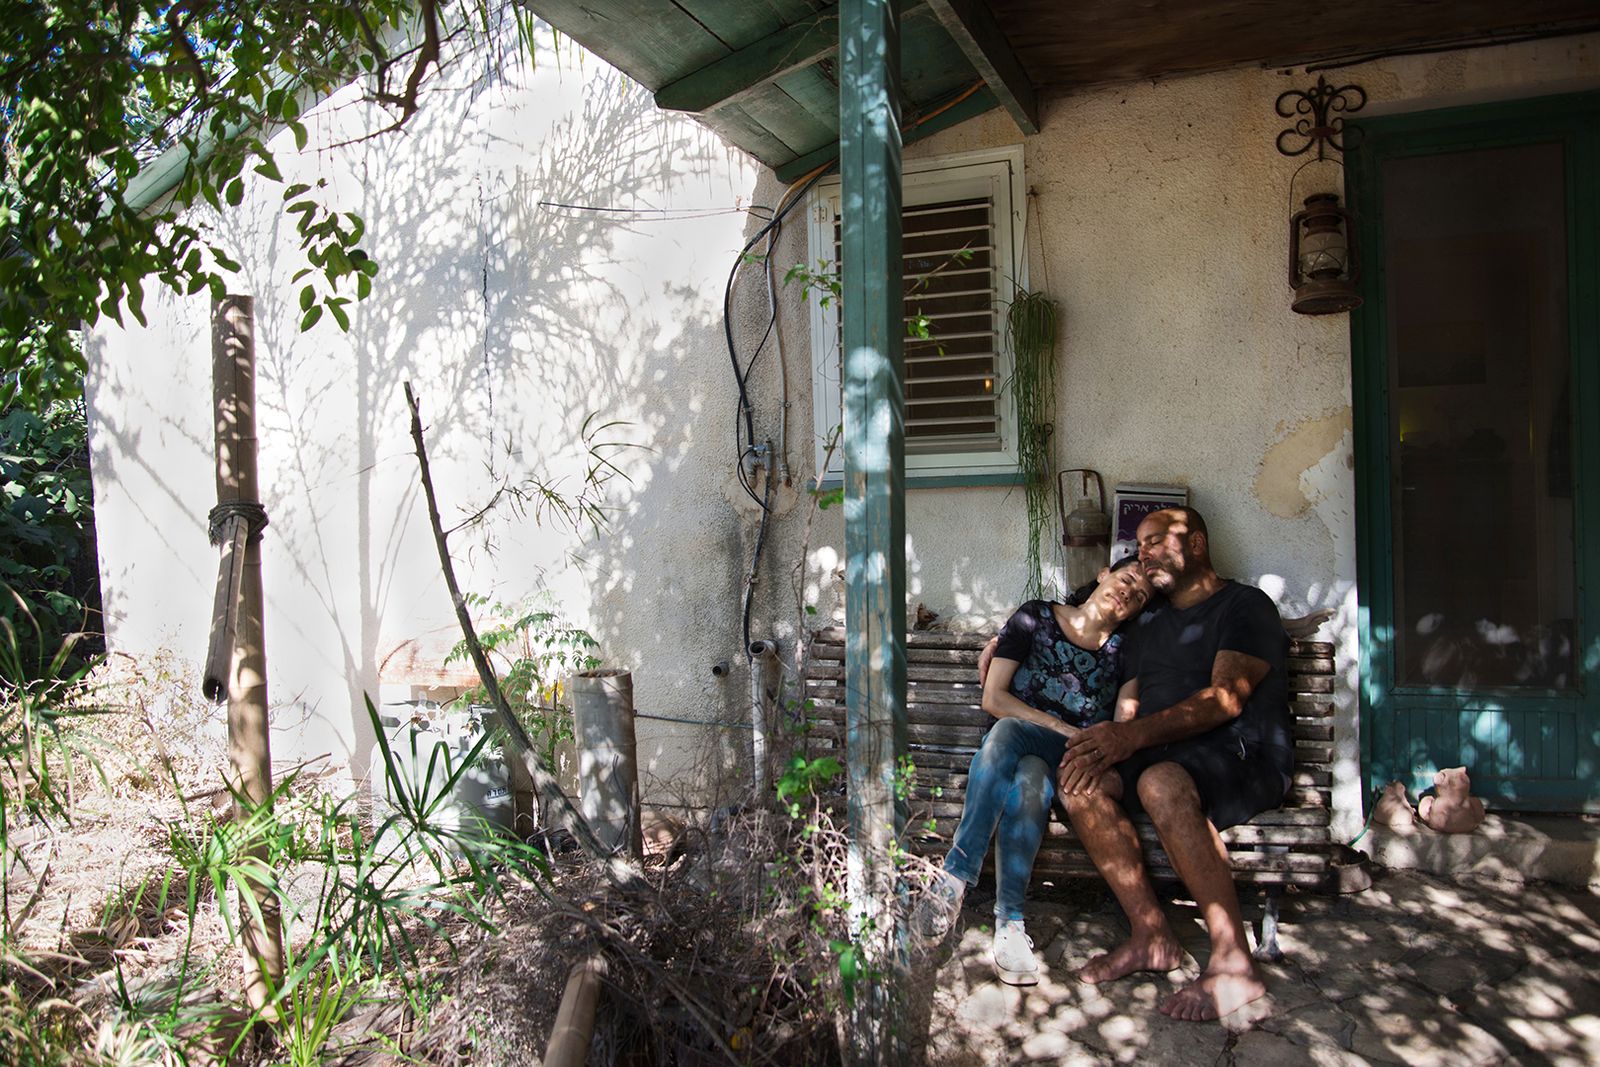 © Daniel Rolider - Arik and Irit outside our house in Shikun Ella neighborhood in Kiryat Tivon, Israel, October 2016.